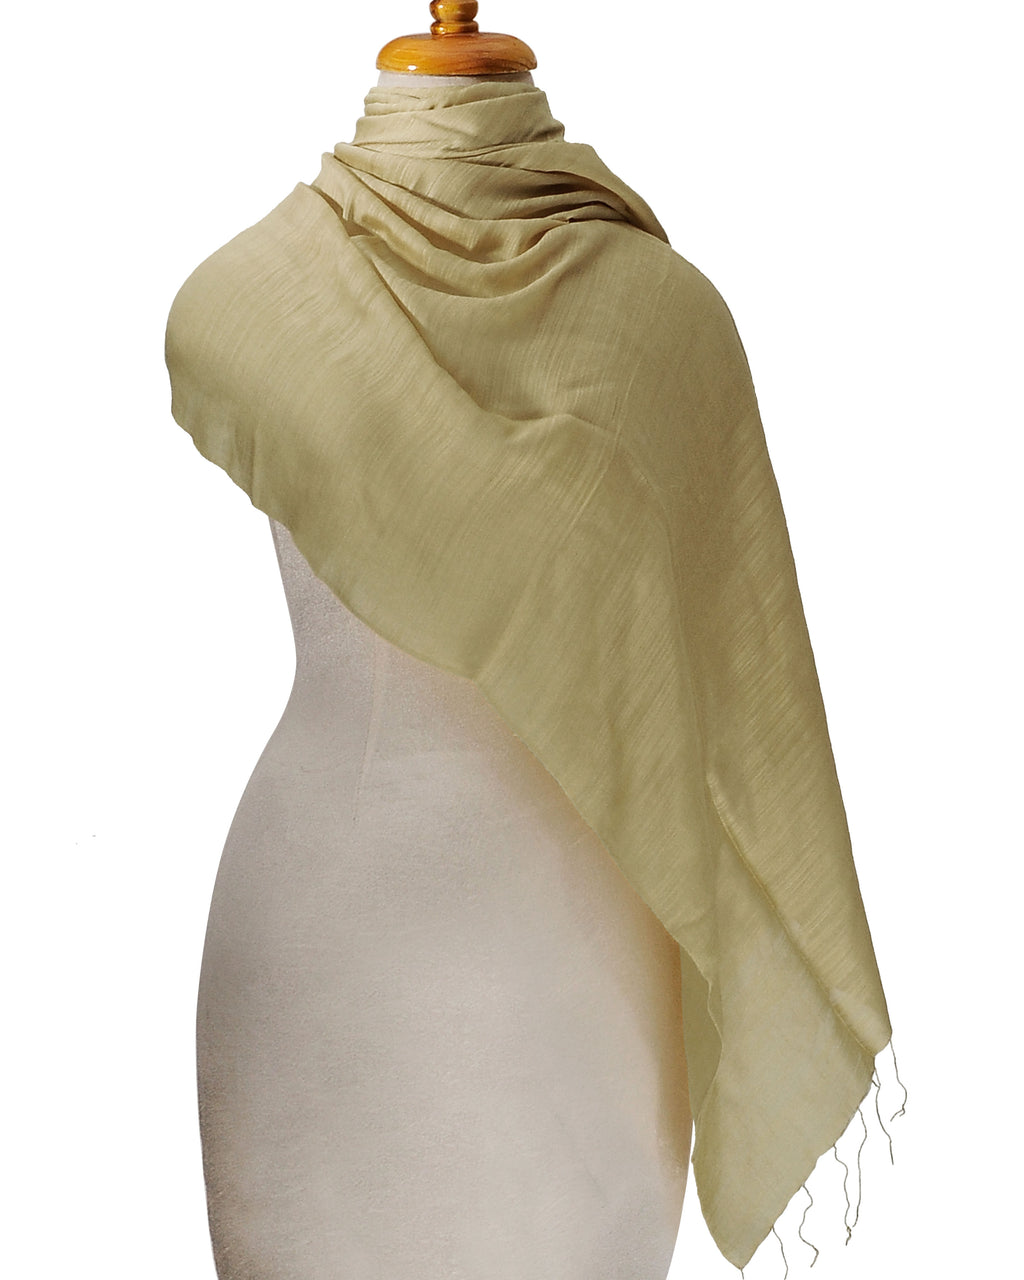 Large Vietnamese Silk Soft Wrap Scarf Shawl Pashmina 70x30 inches New ...